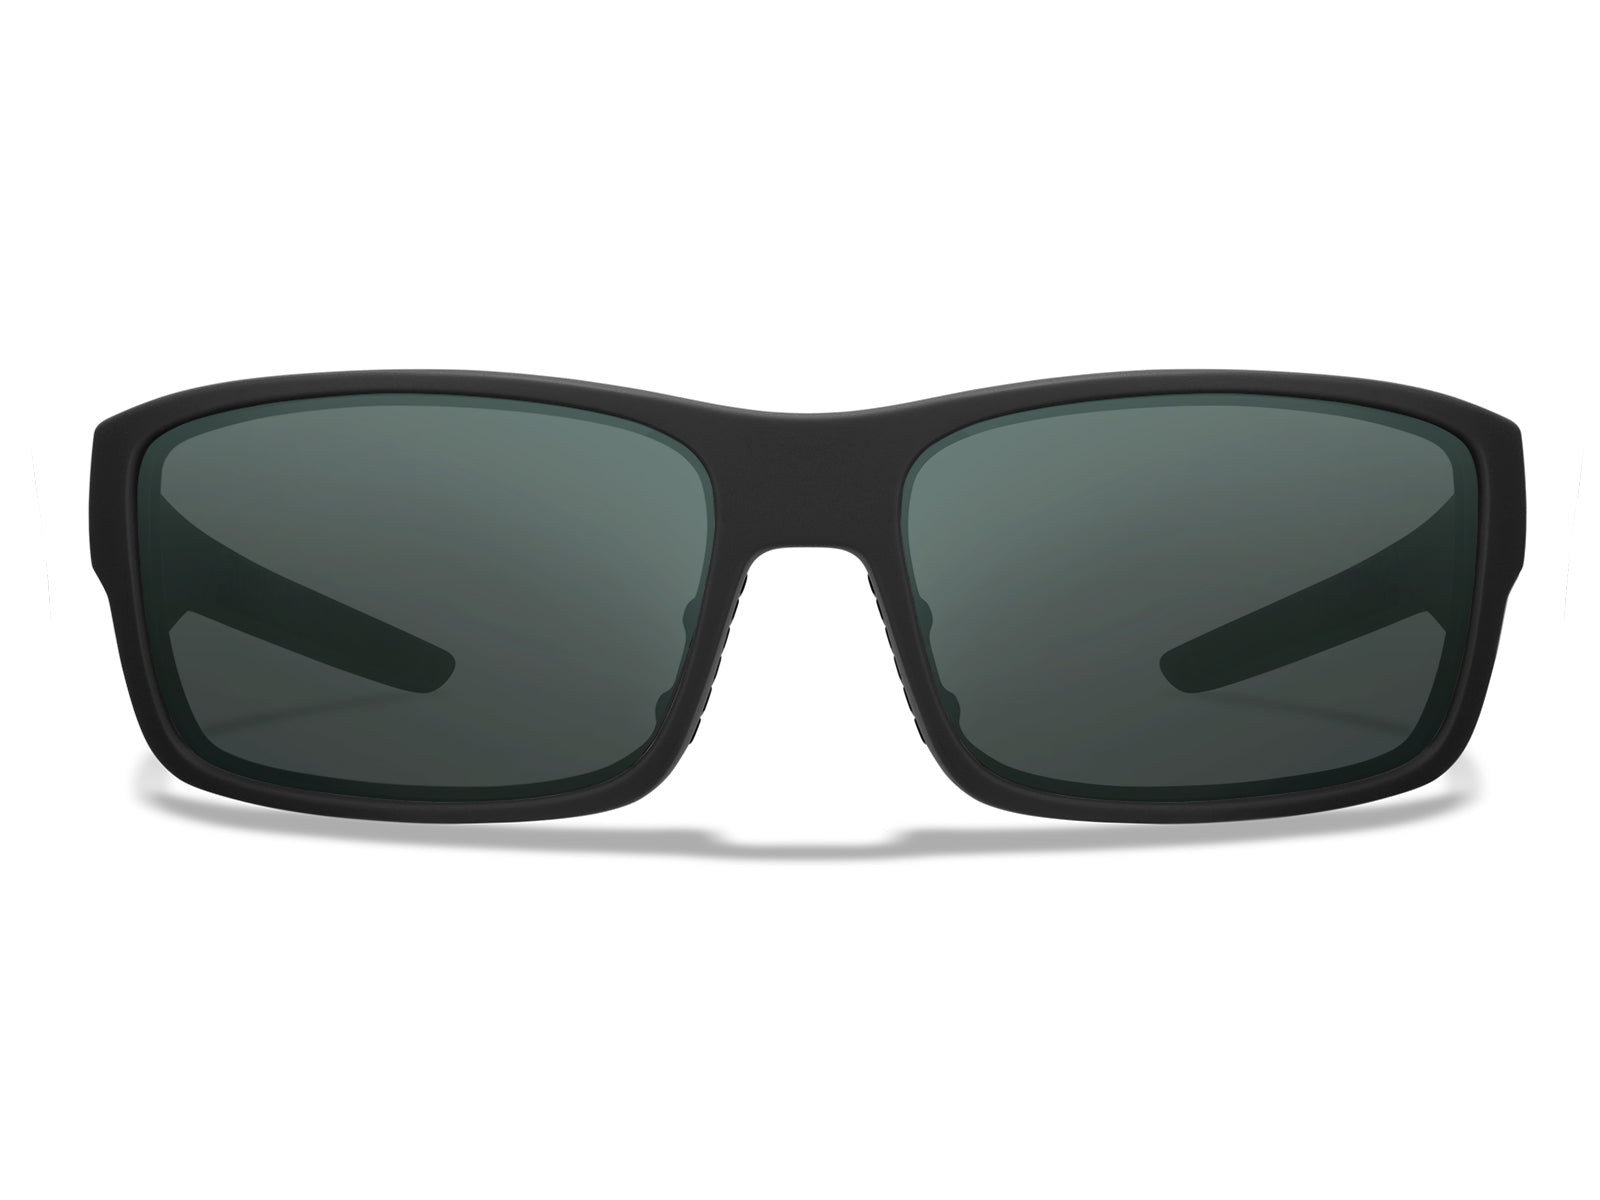 Roka AT-1 Sunglasses with Matte Black Frames - Dark Carbon (Polarized) Lens | AT-1 (40mm Tall Lens)